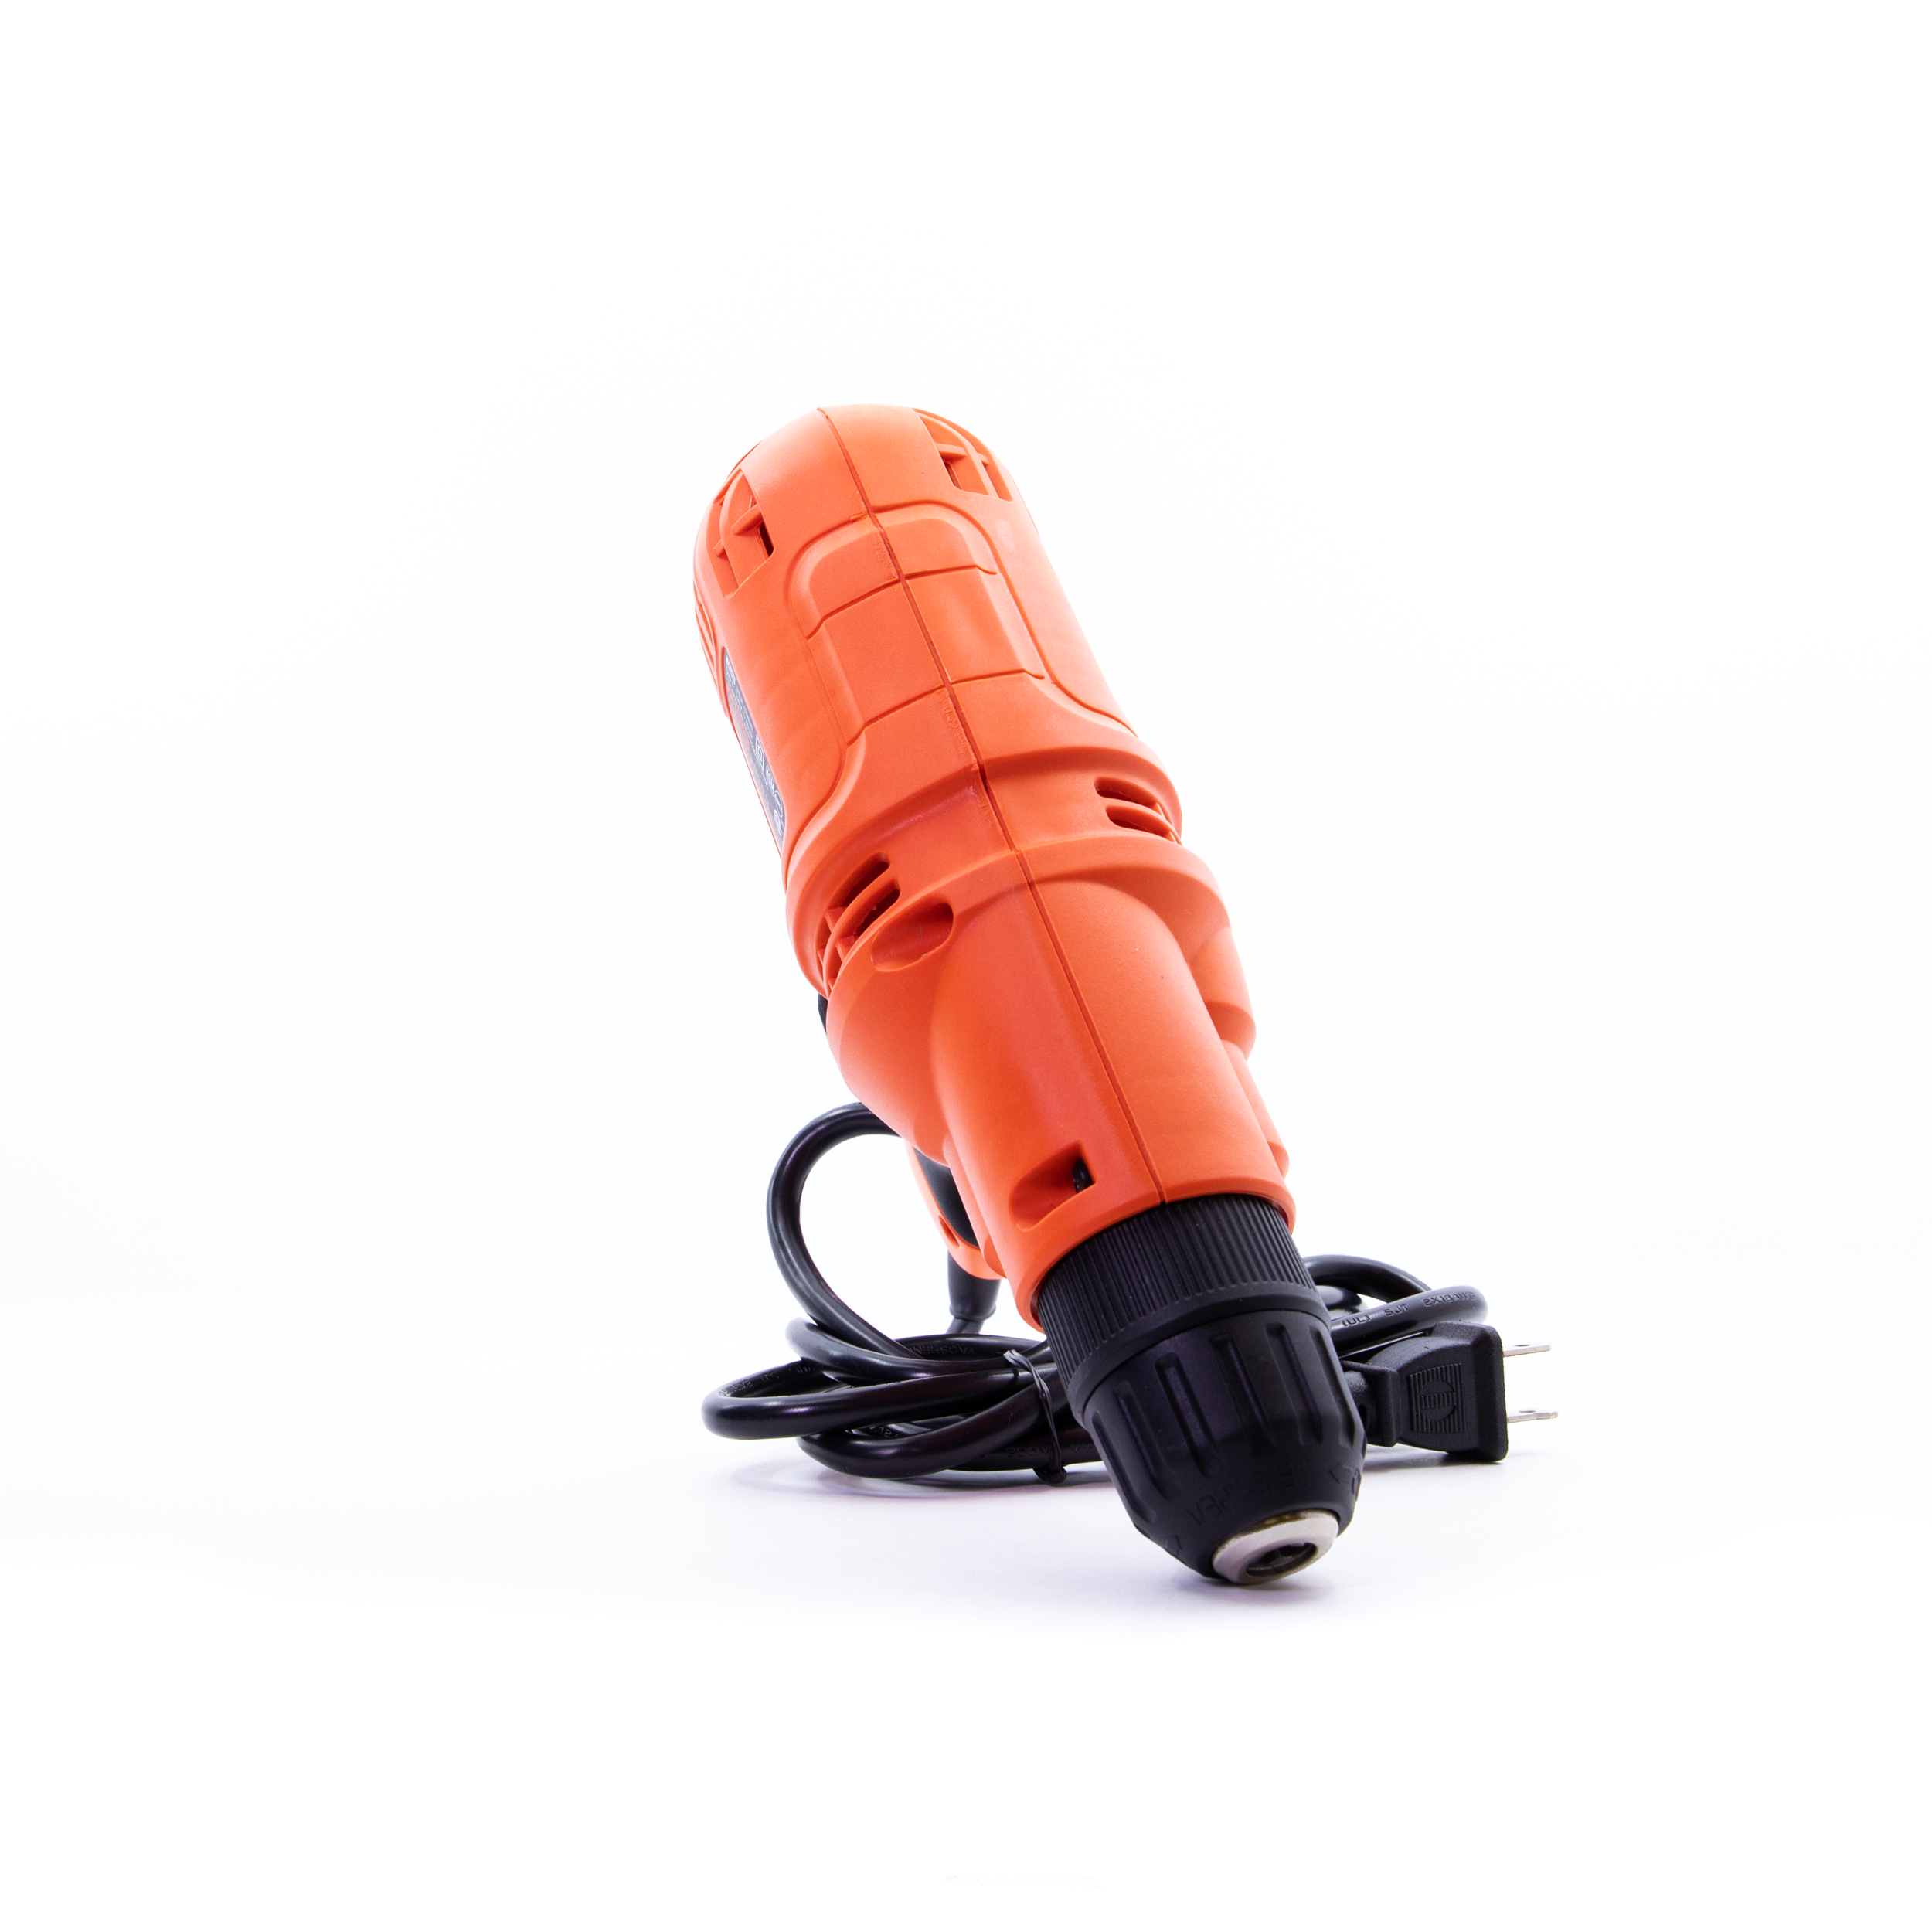 Black & Decker DR260 5.2 Amp 3/8 in. Corded Drill - Orange